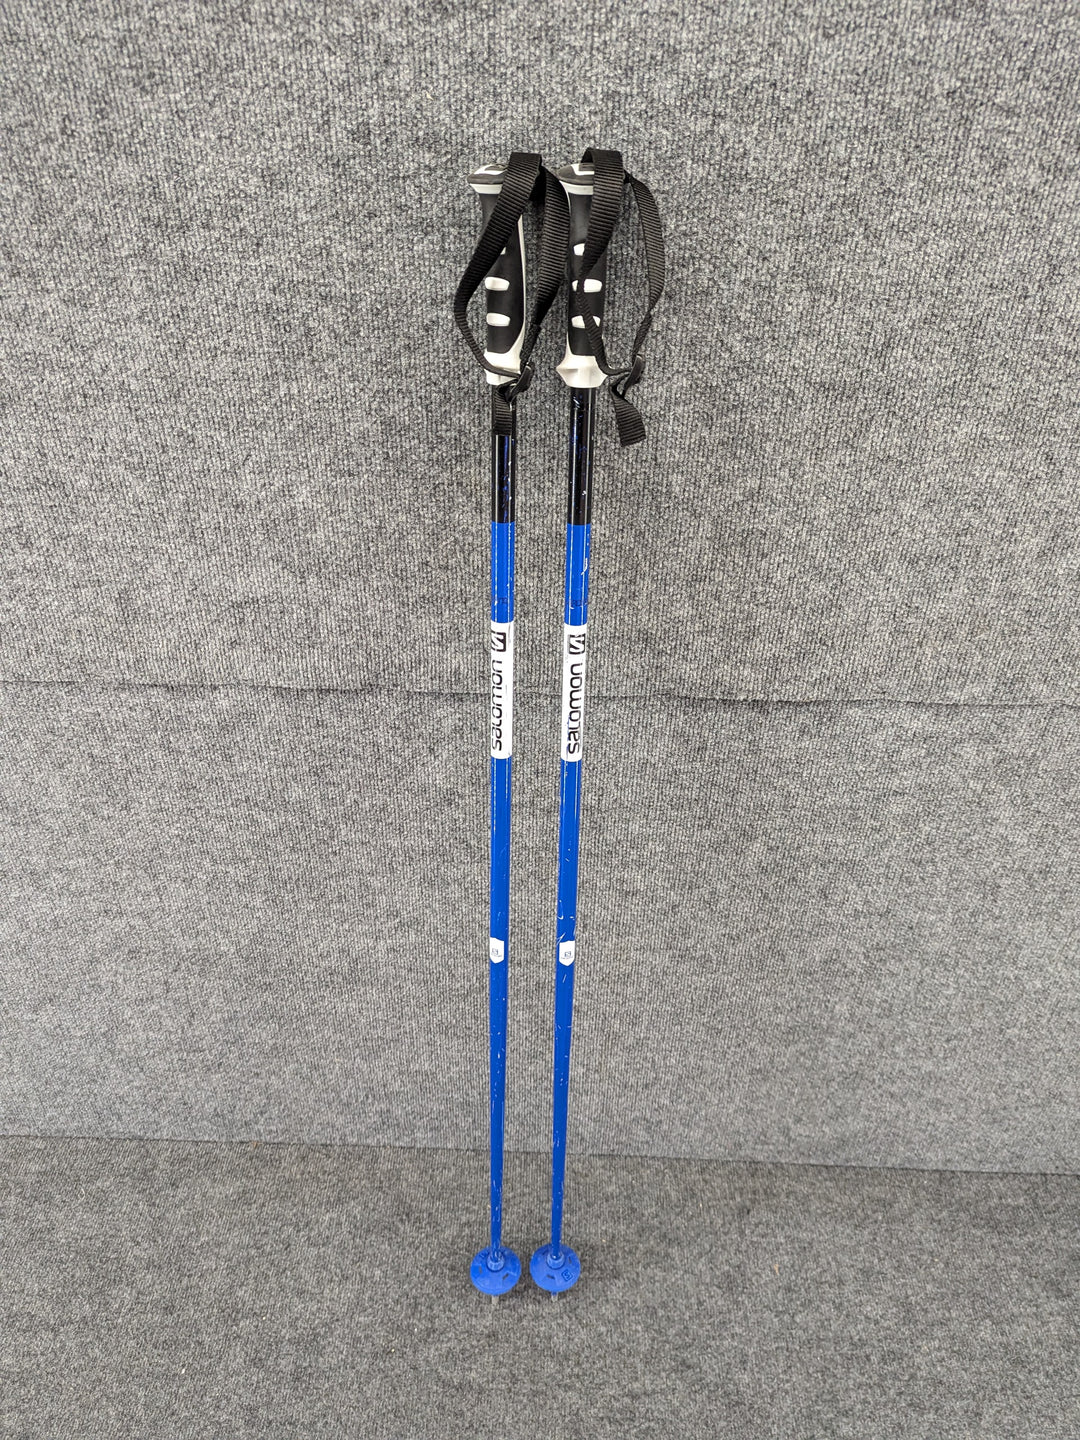 Salomon Length 120 Alpine Ski – Rambleraven Gear Trader